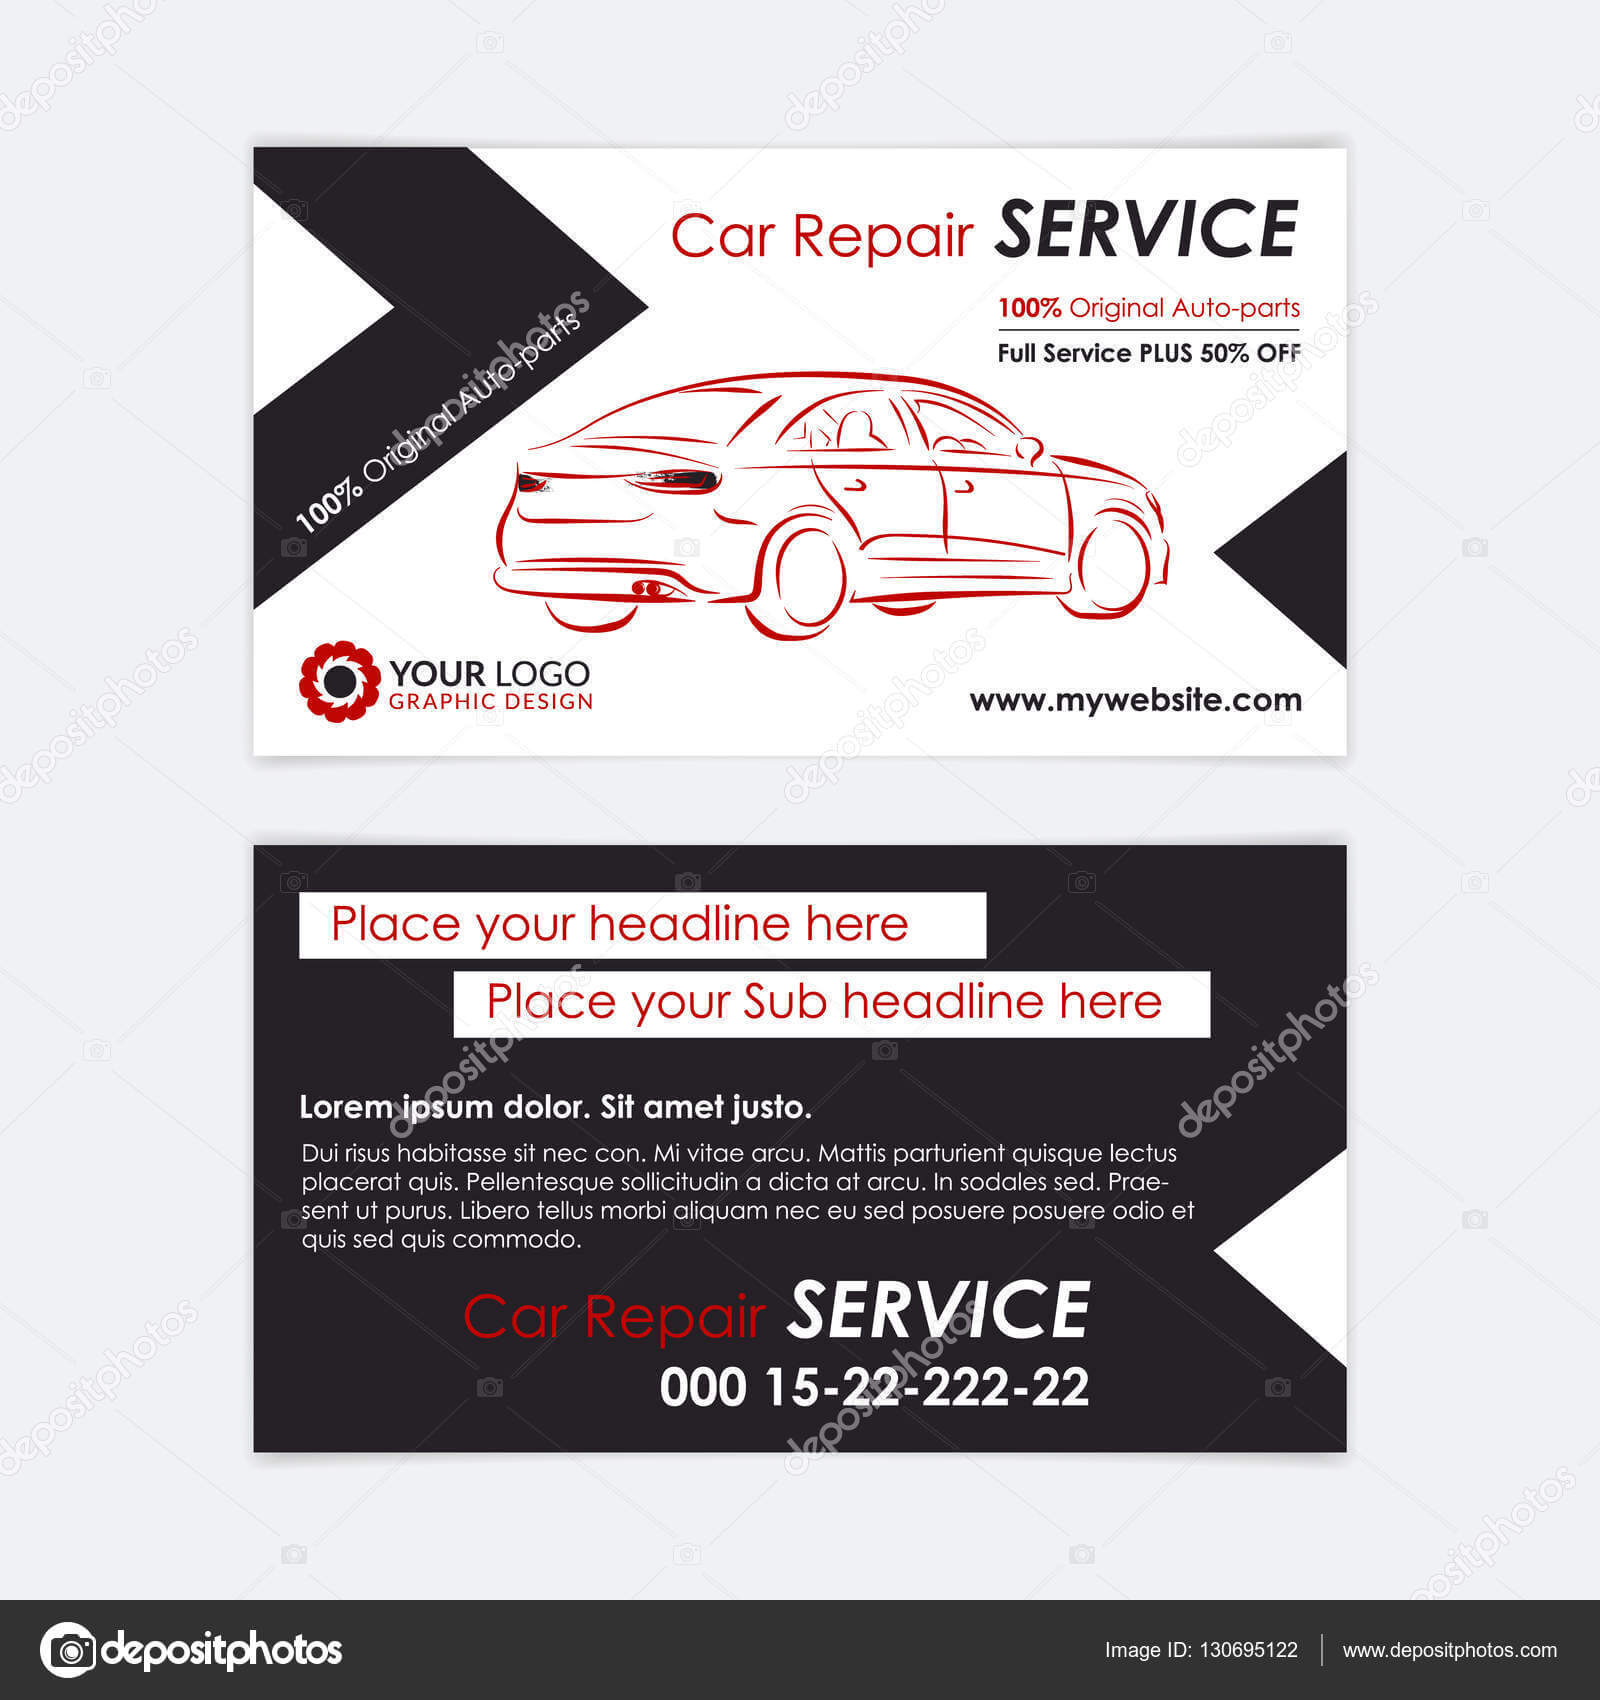 Automotive Business Card Templates | Auto Repair Business In Automotive Business Card Templates